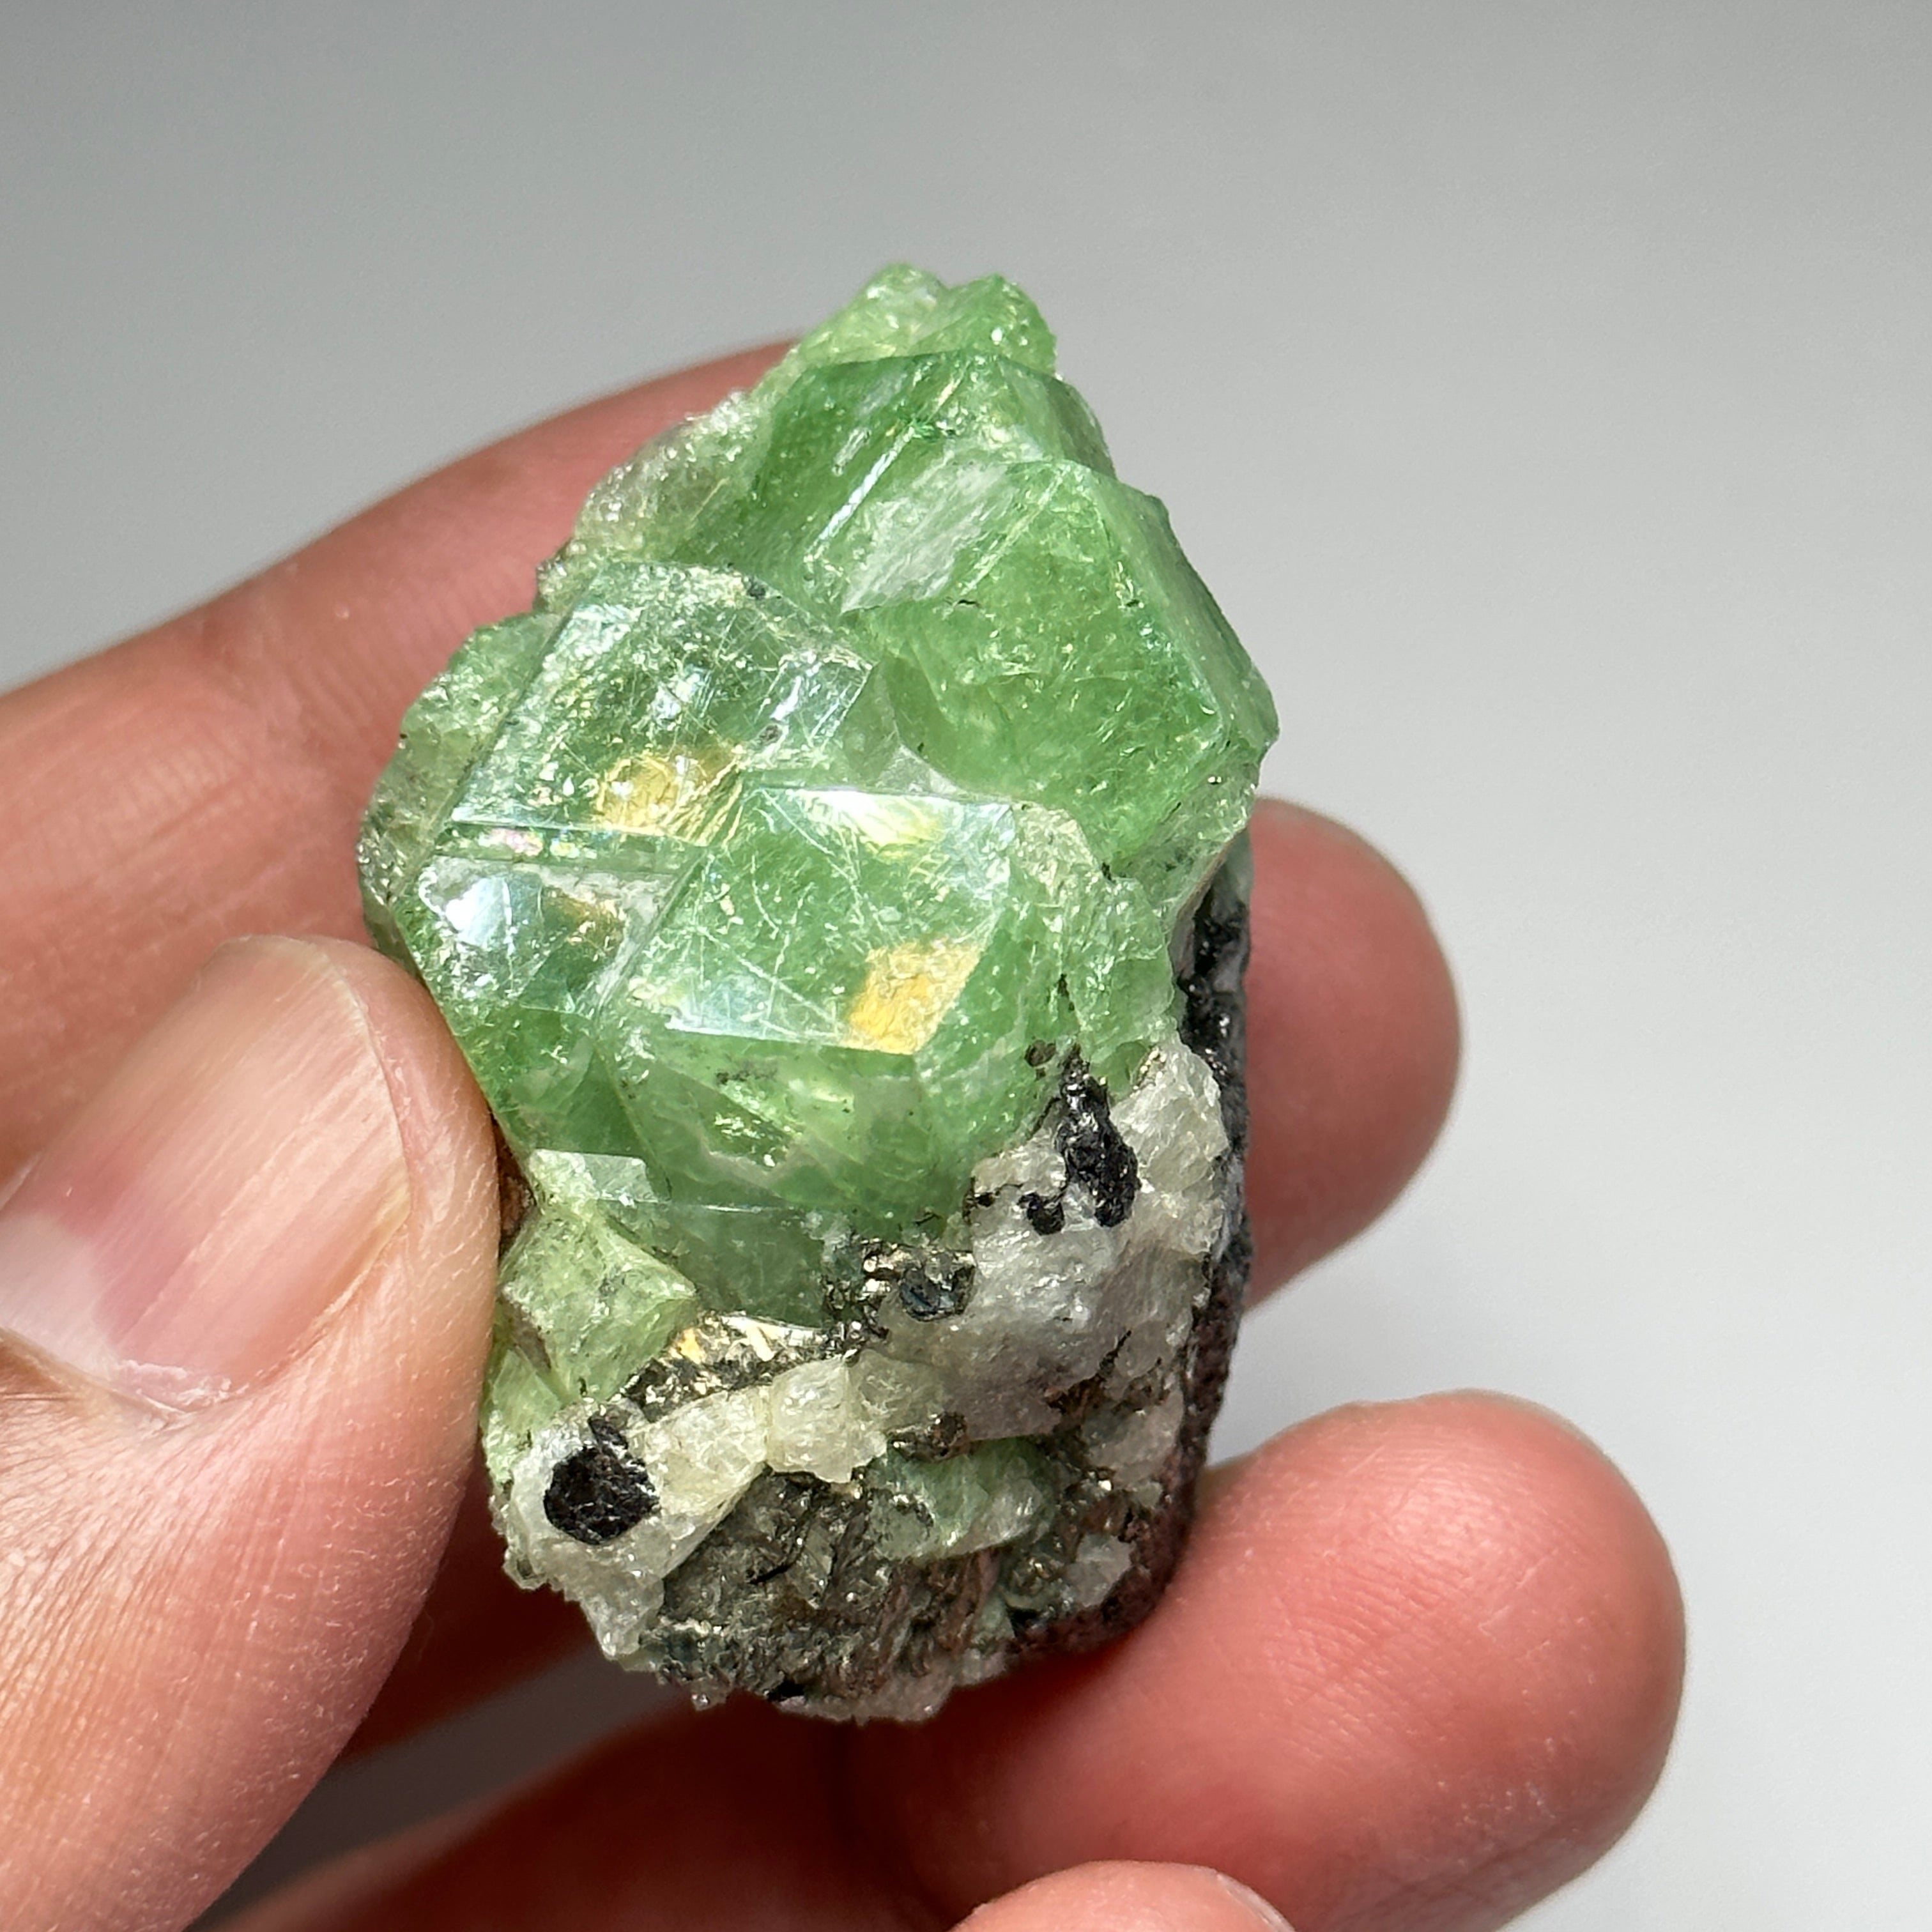 39.50gm / 197.50ct Tsavorite Crystal With Tanzanite And Pyrite on Matrix, Merelani, Tanzania. 41 x 27 x 26mm, very rare crystallization